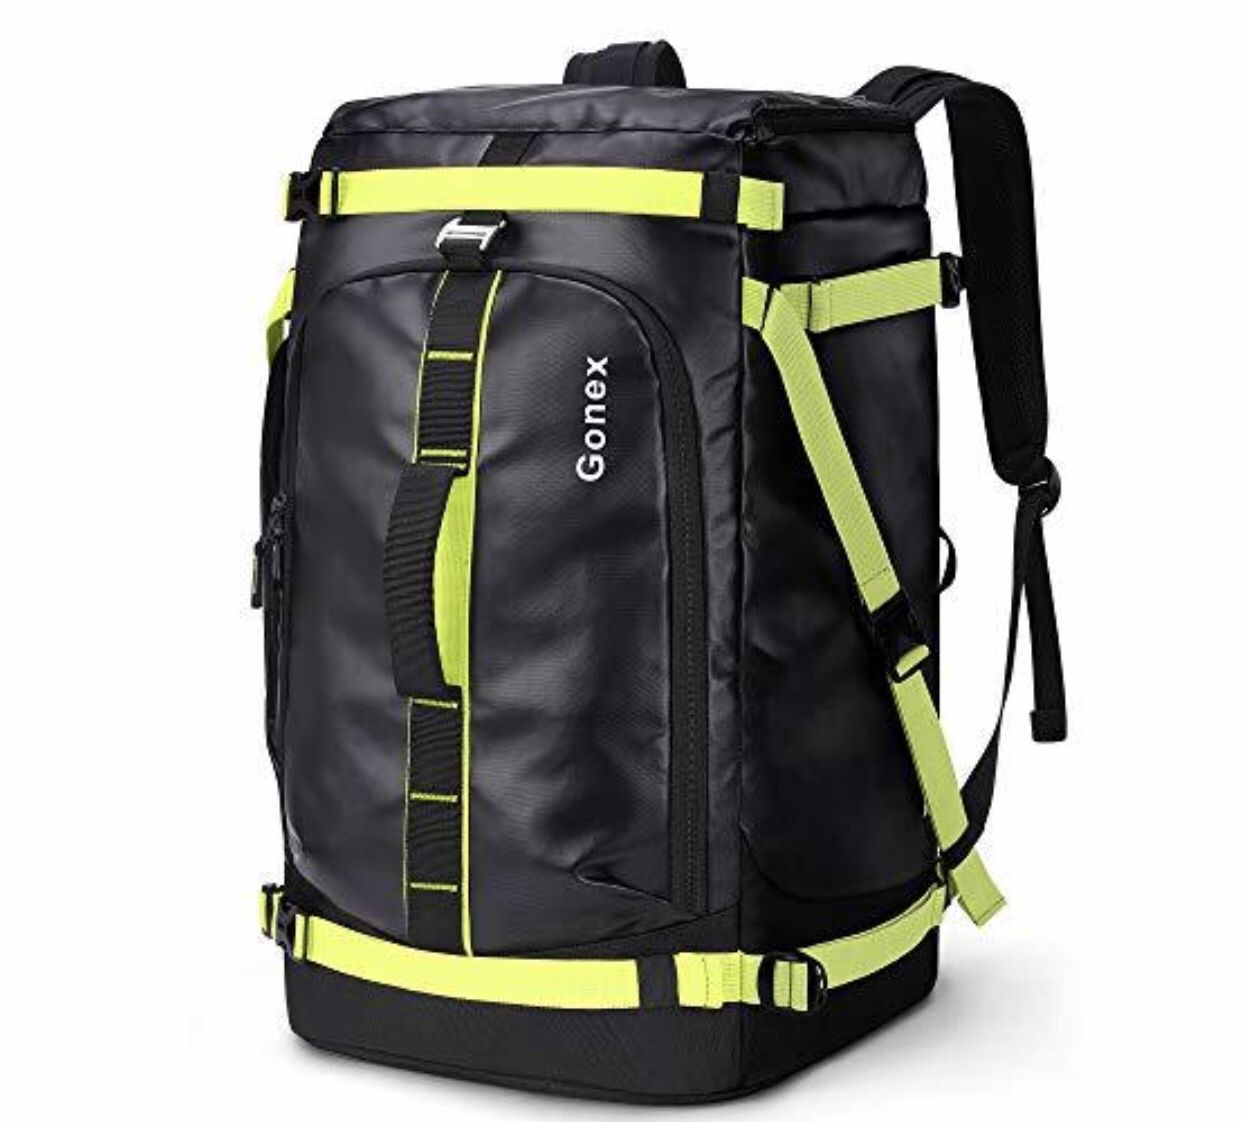 Waterproof Backpack Bag Large Capacity for Ski,Hiking or Camping